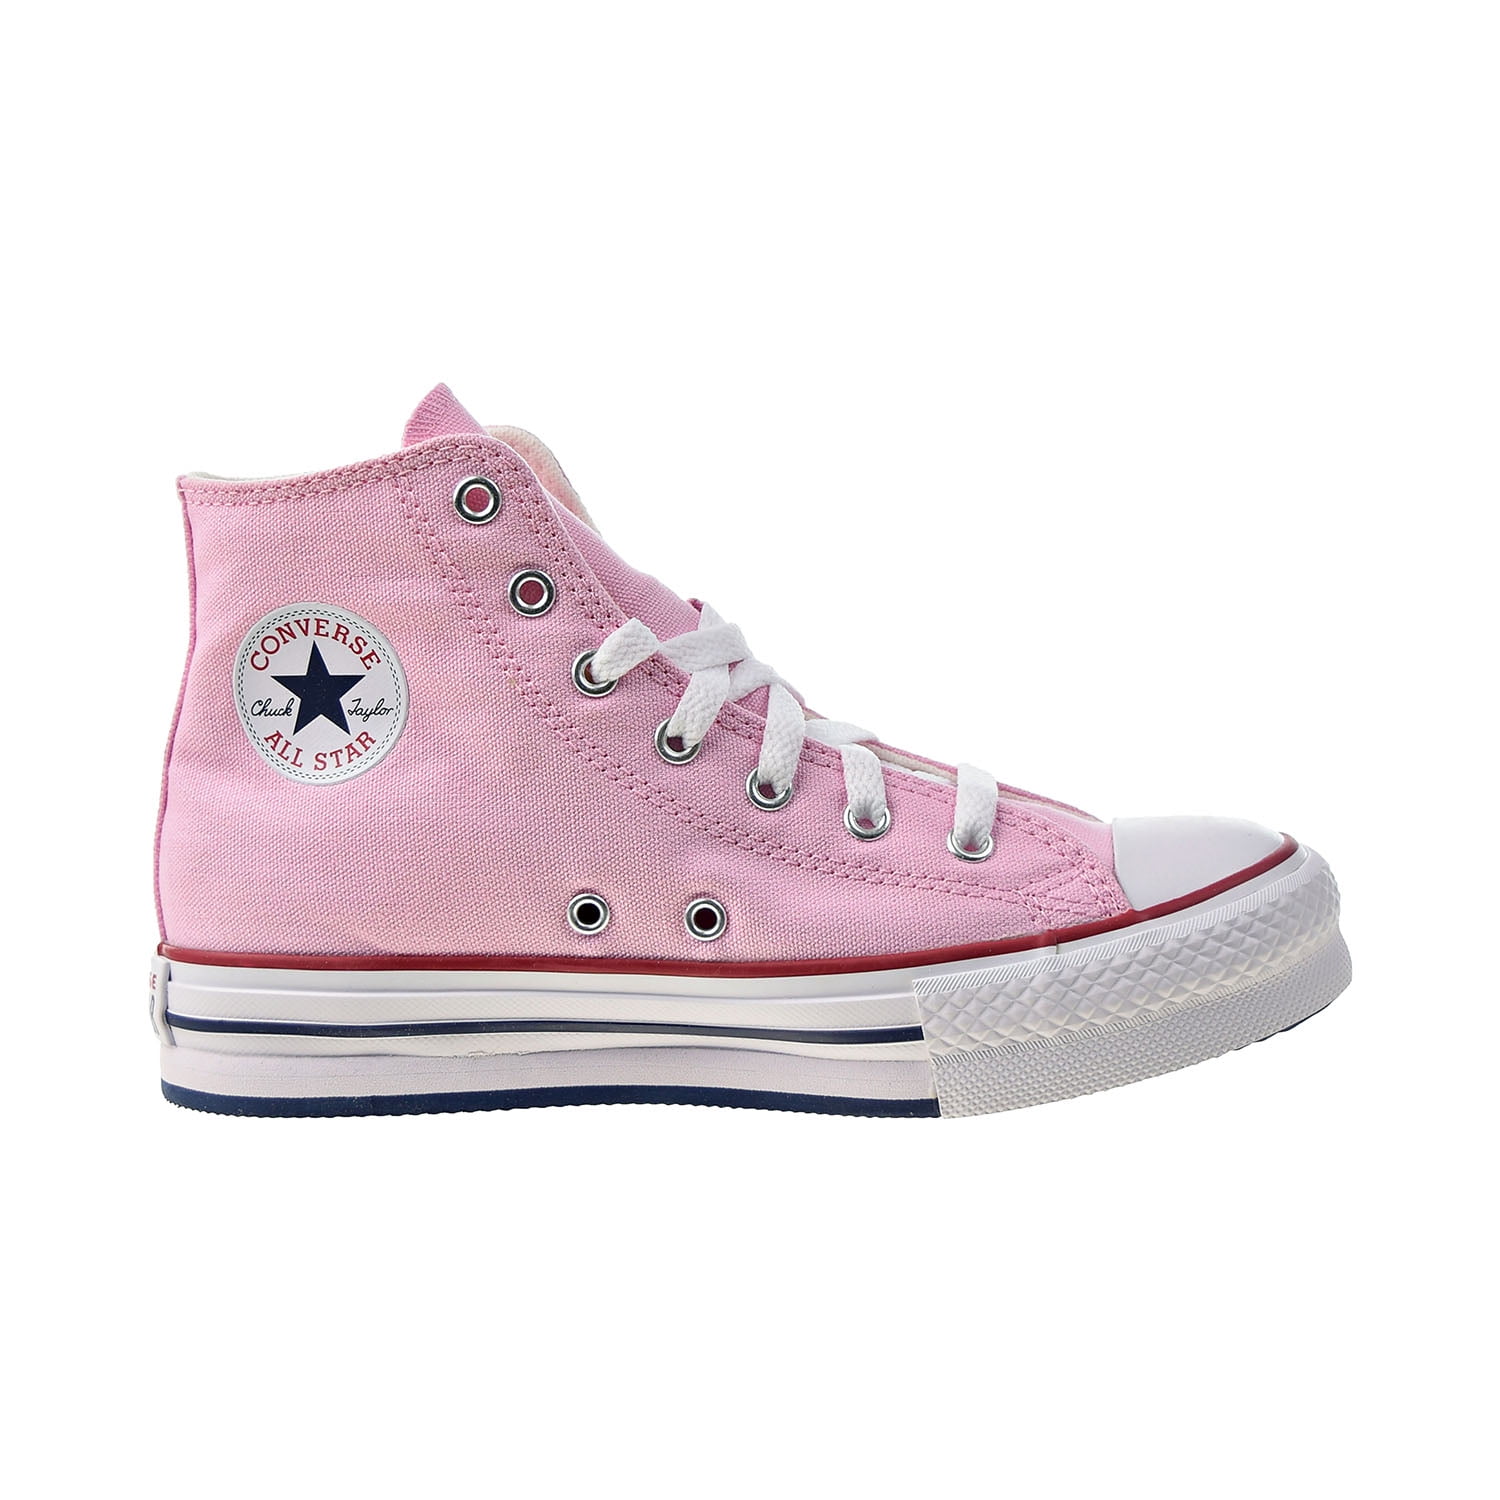 Chuck Taylor All Star Lift Hi Kids' Shoes Pink Glaze-White 671106c - Walmart.com